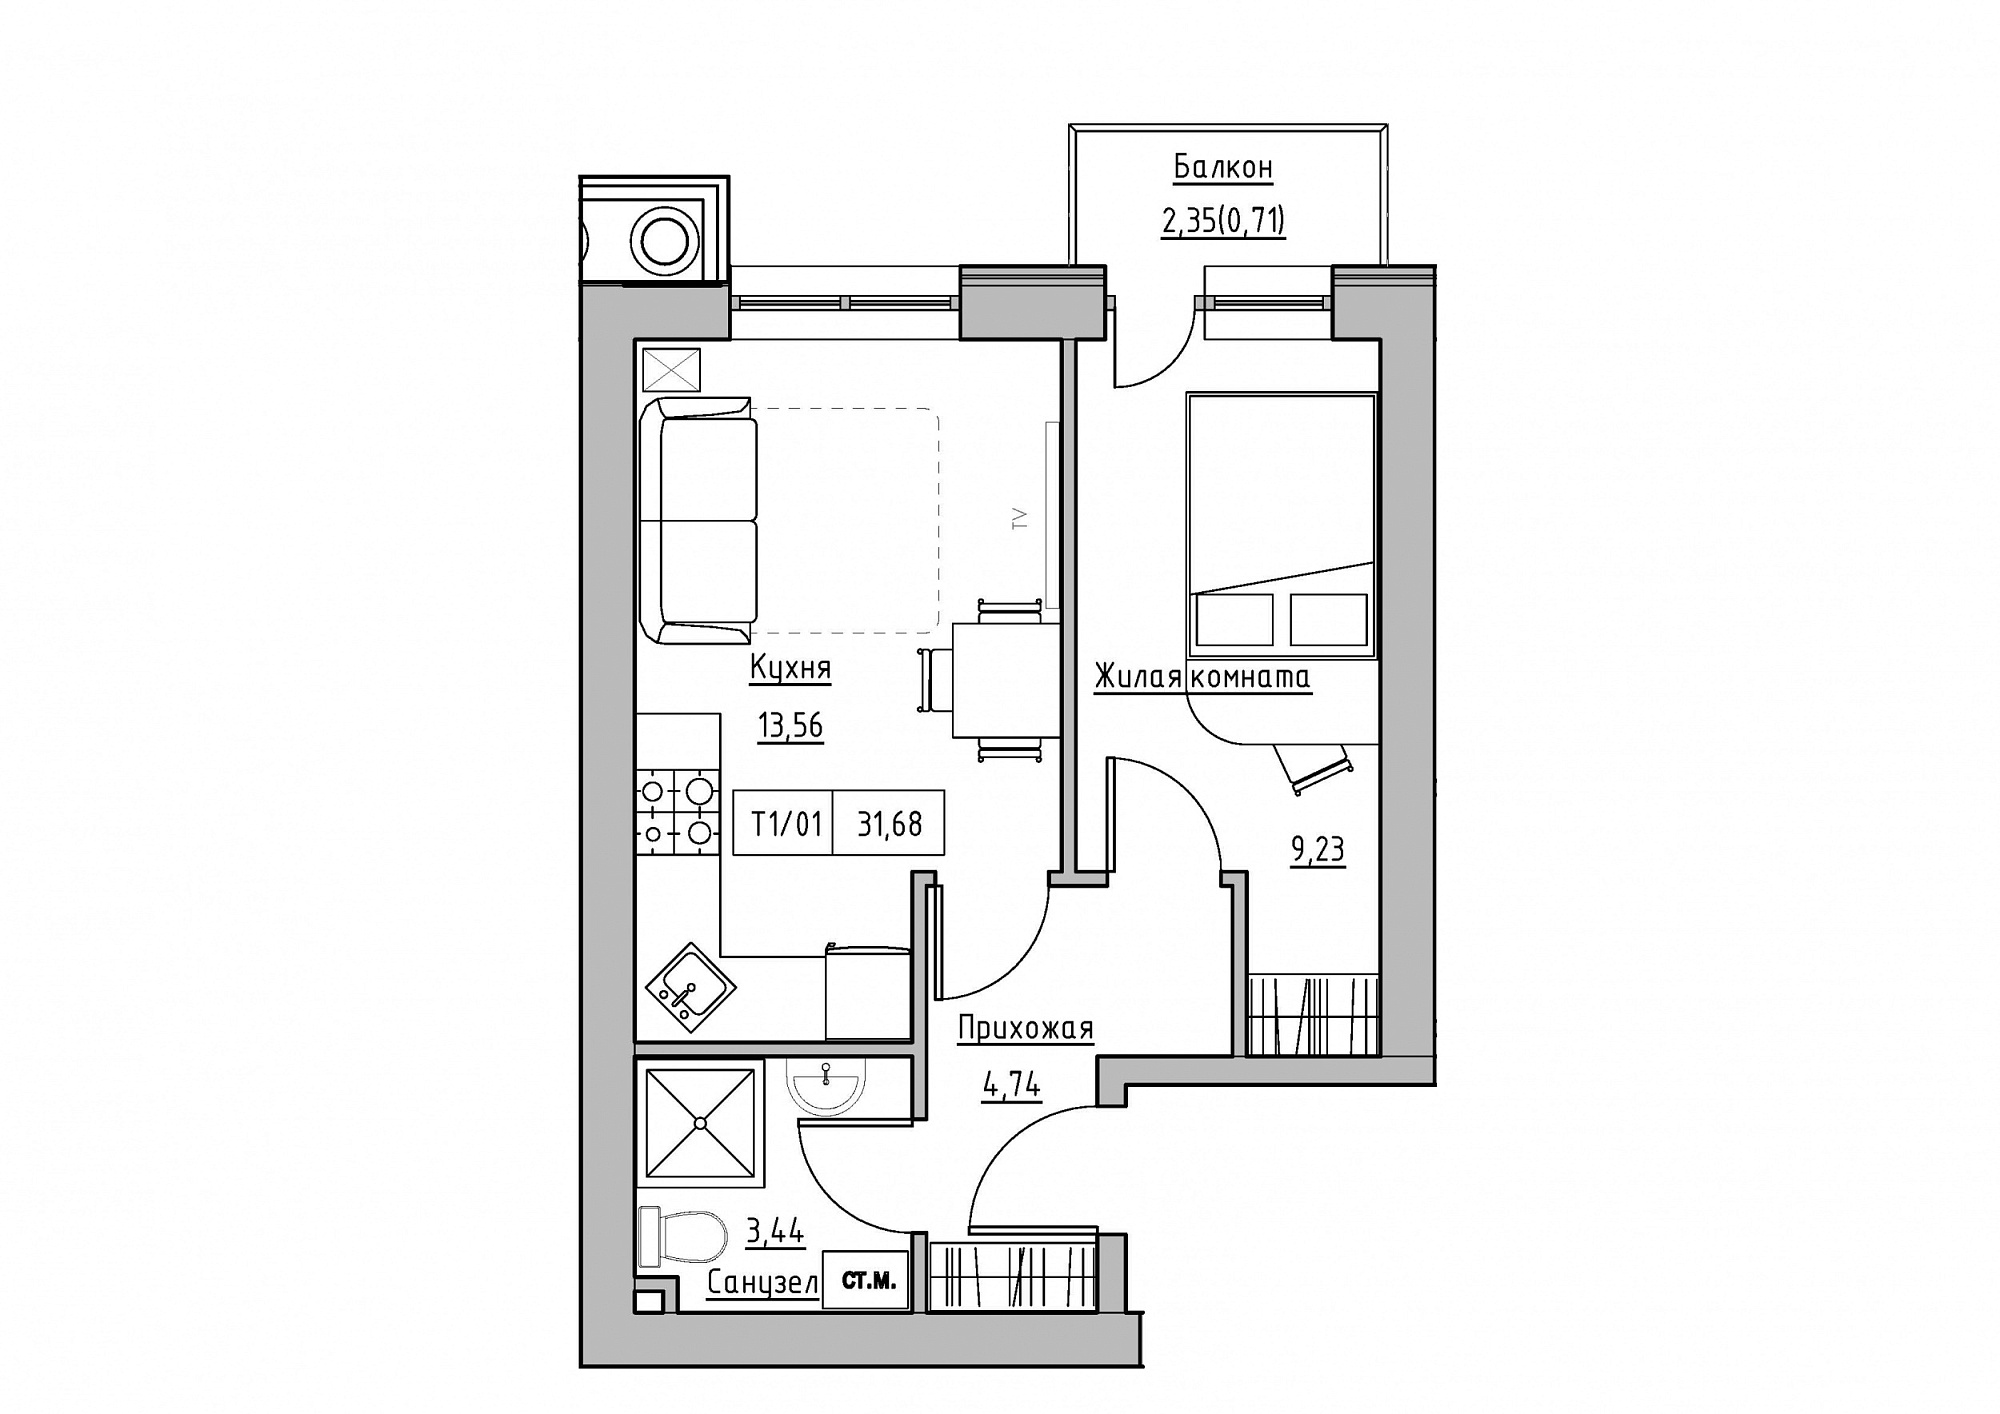 Planning 1-rm flats area 31.68m2, KS-011-05/0016.